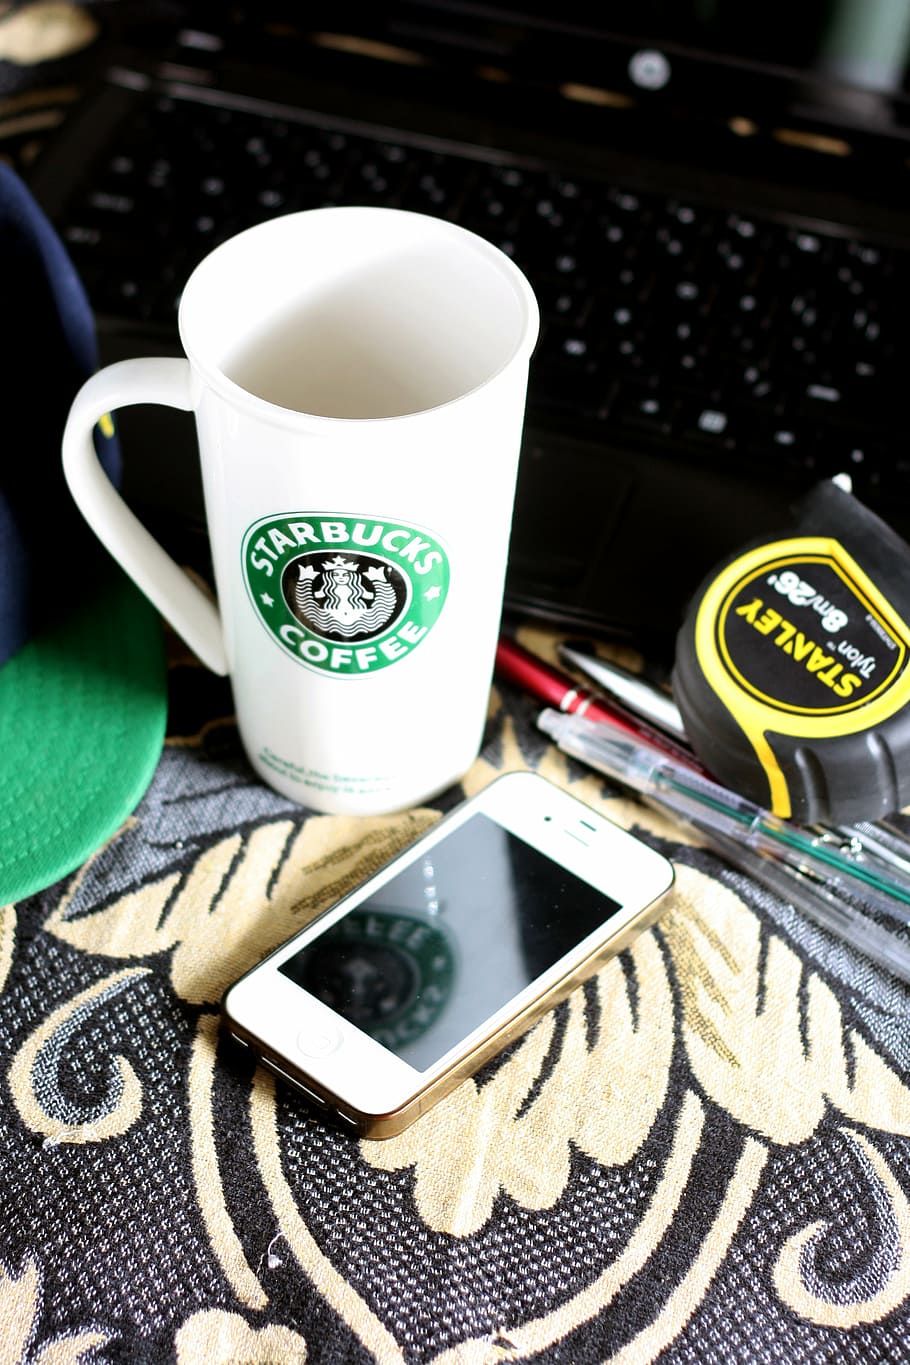 putih, hijau, mug starbucks, meja, iphone, starbucks, kopi, mug, teknologi, gadget